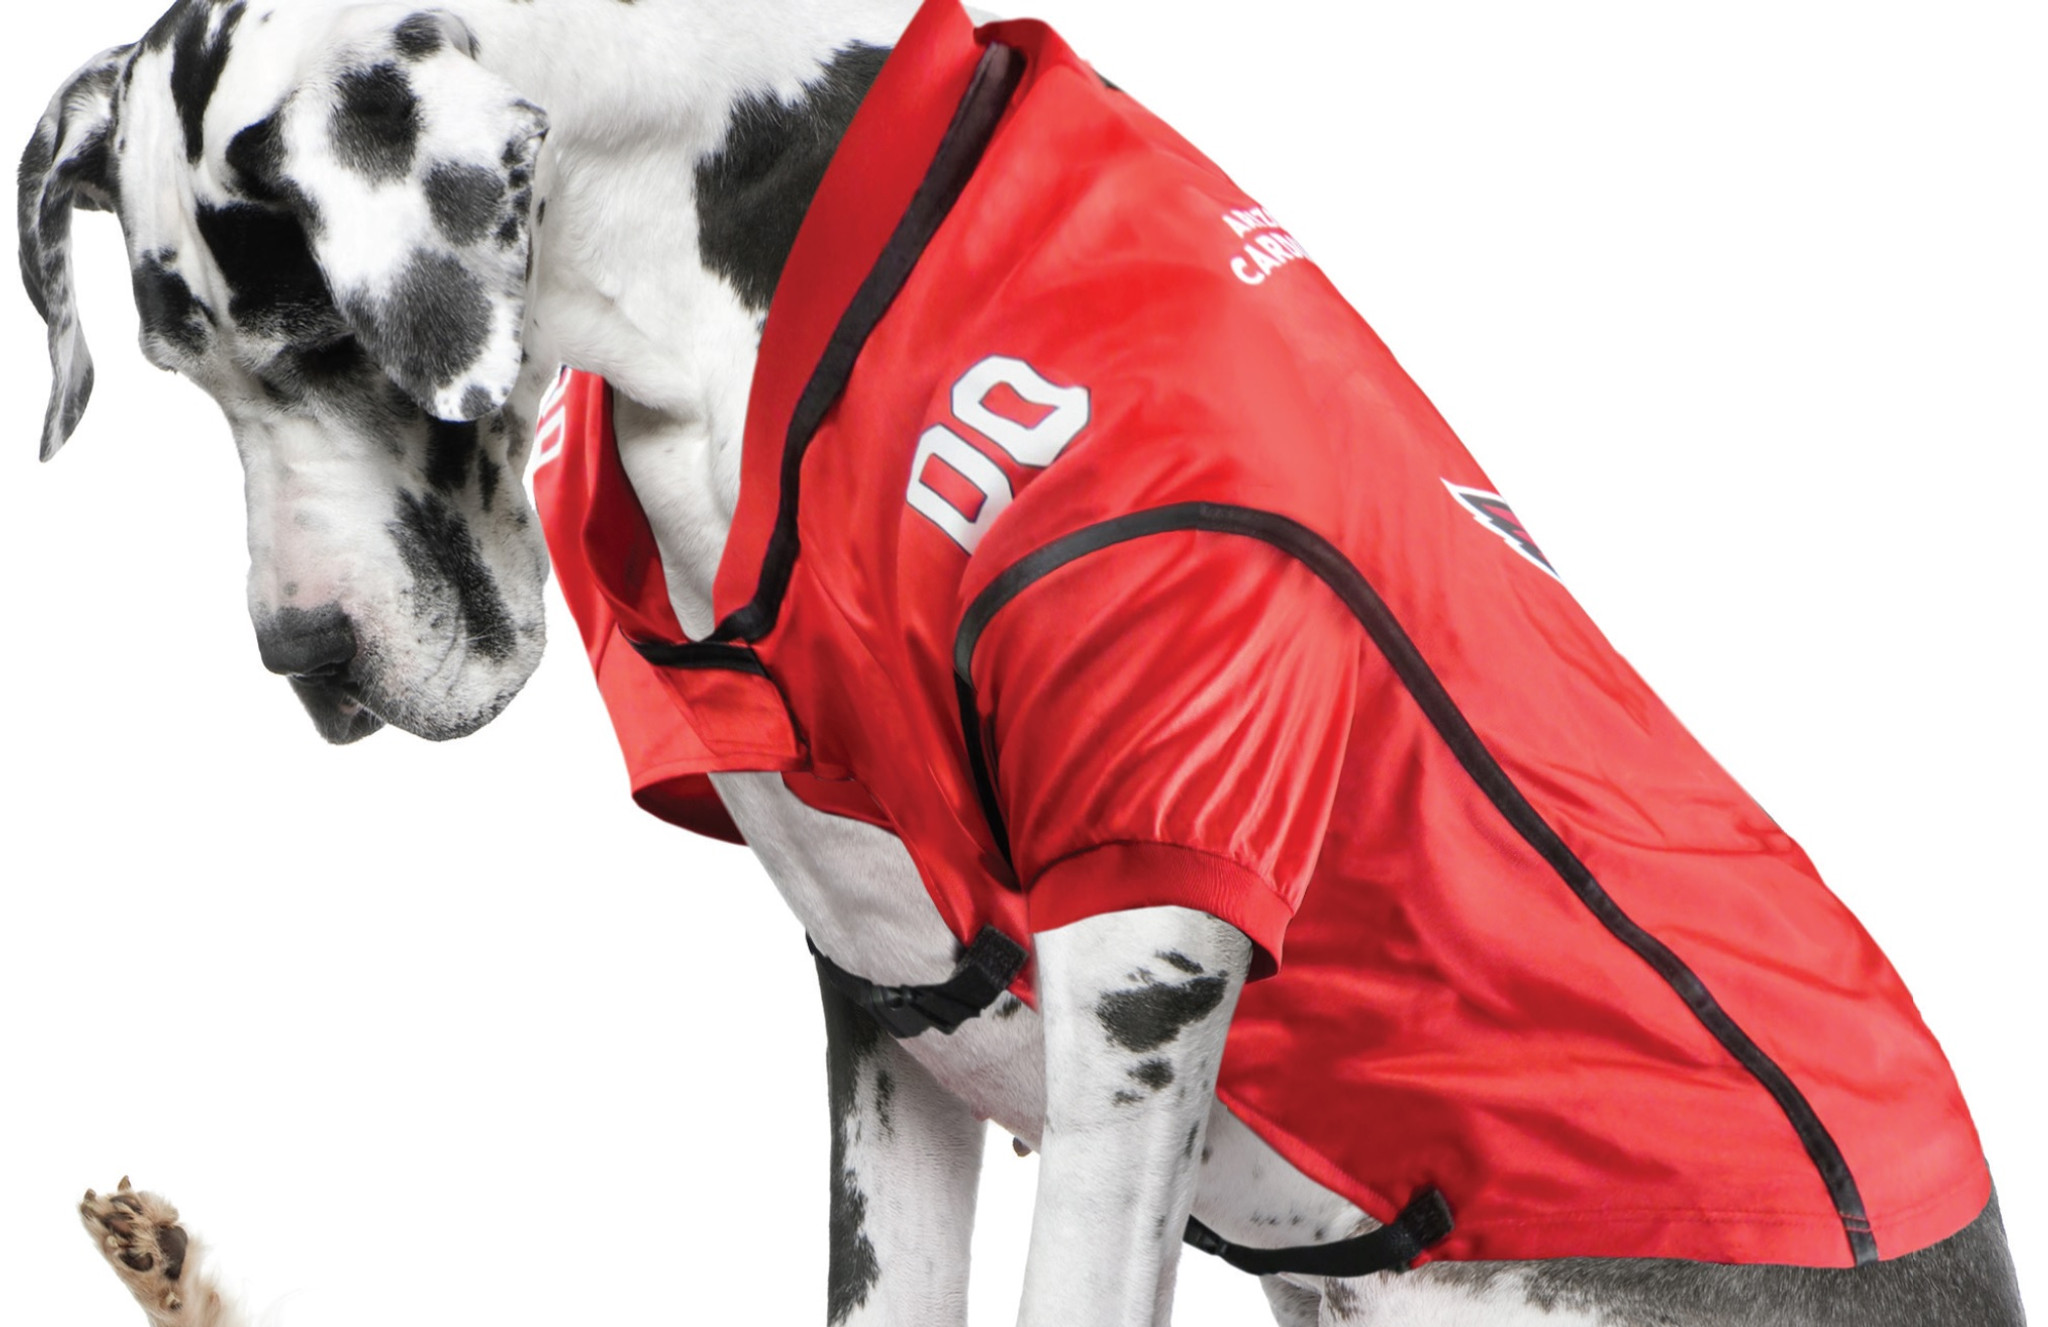 Toronto Maple Leafs Dog Pet Premium Mesh Hockey Jersey - Spawty